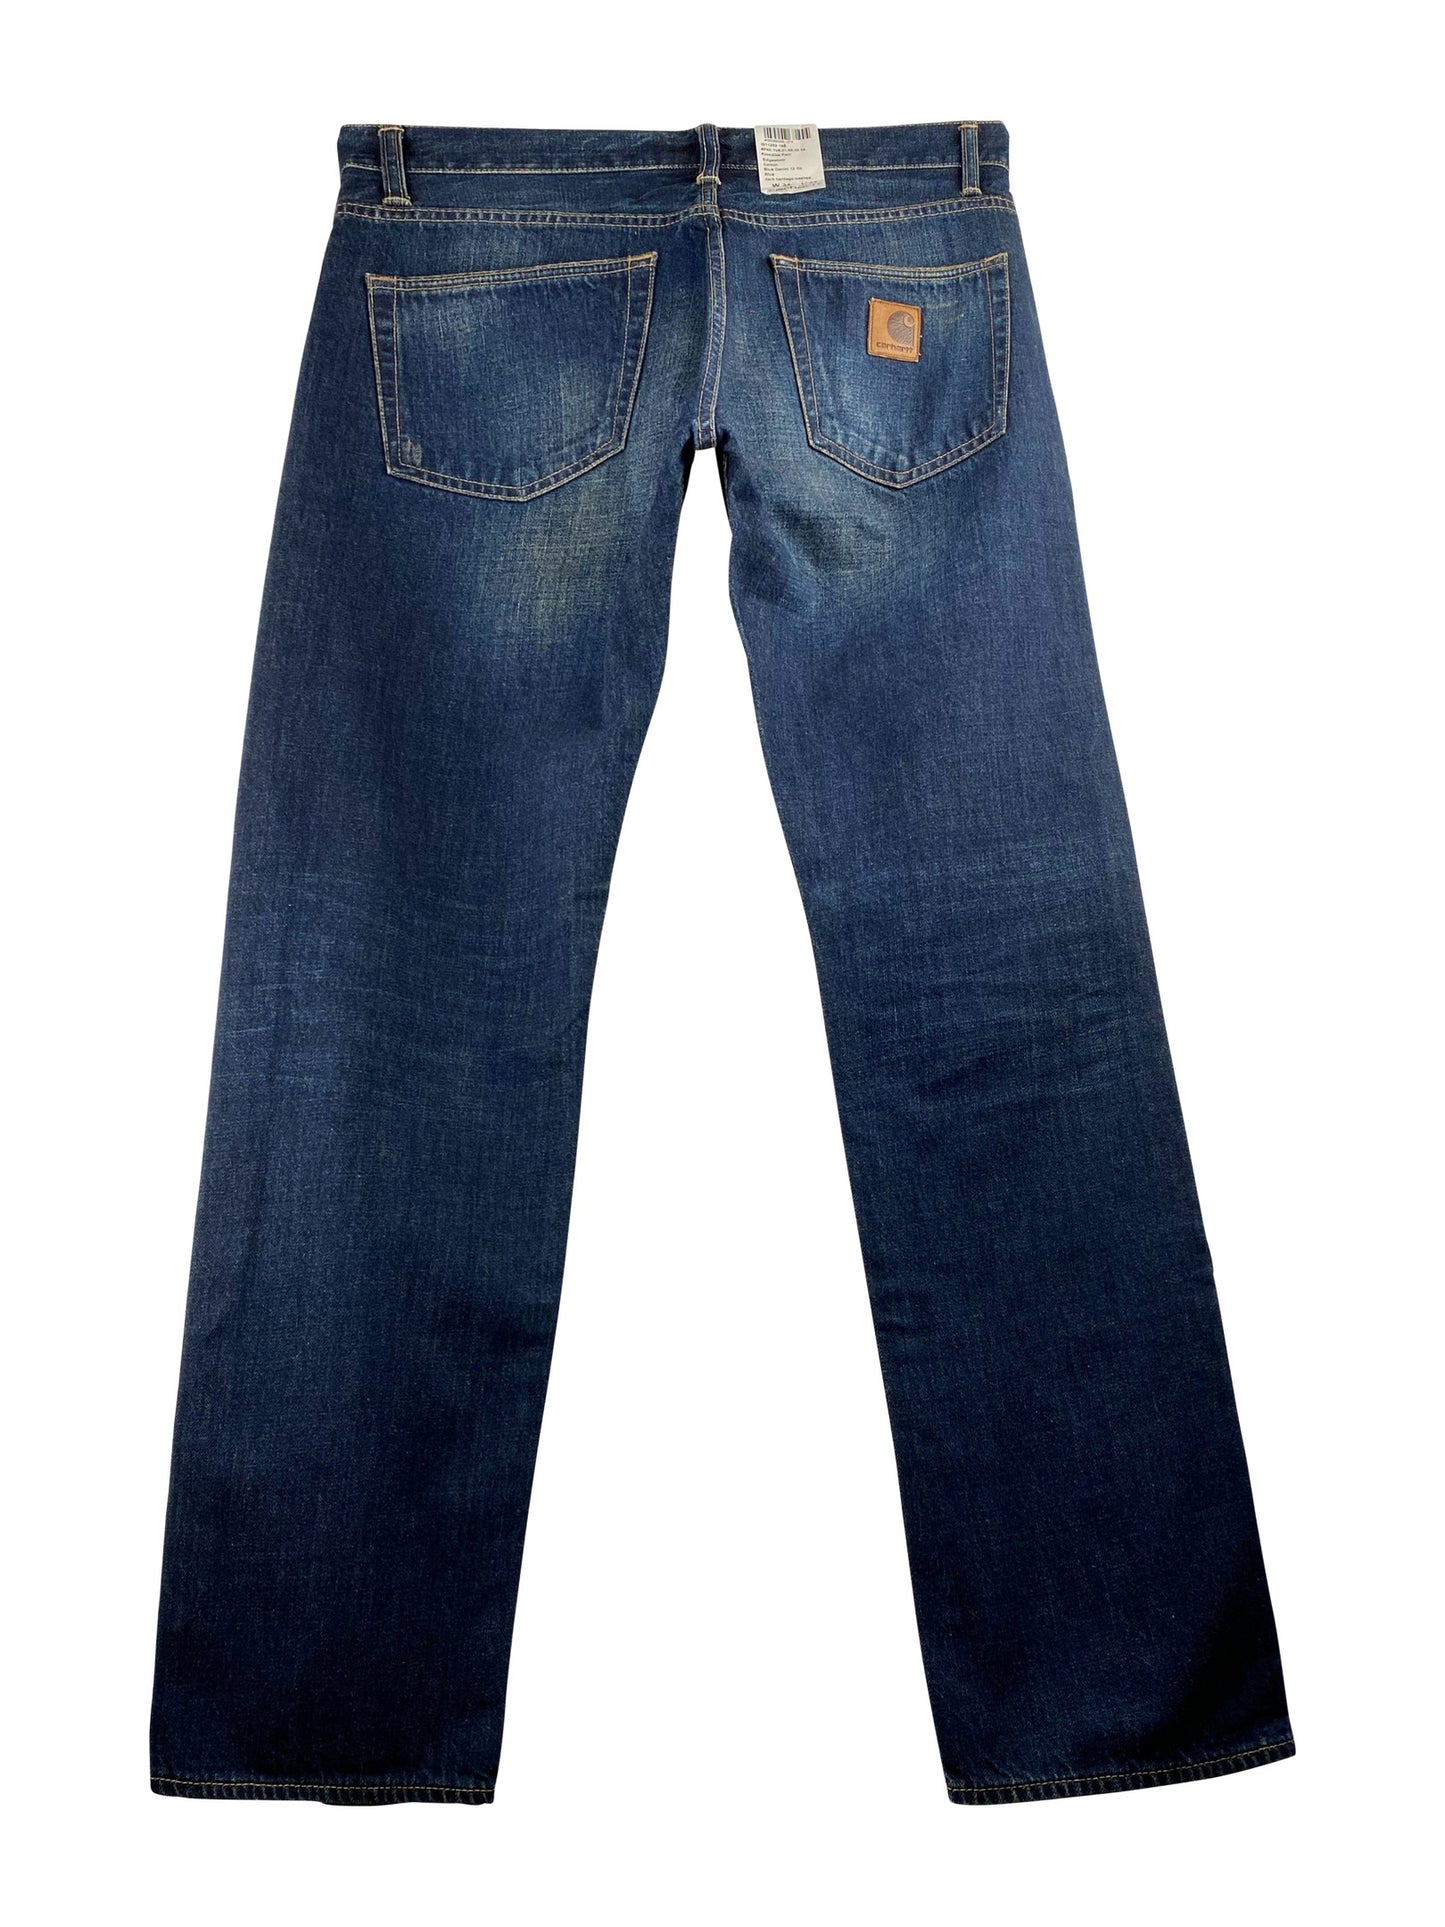 Carhartt Jeans “Klondike Pant Edgewood” -blue dark heritage washed